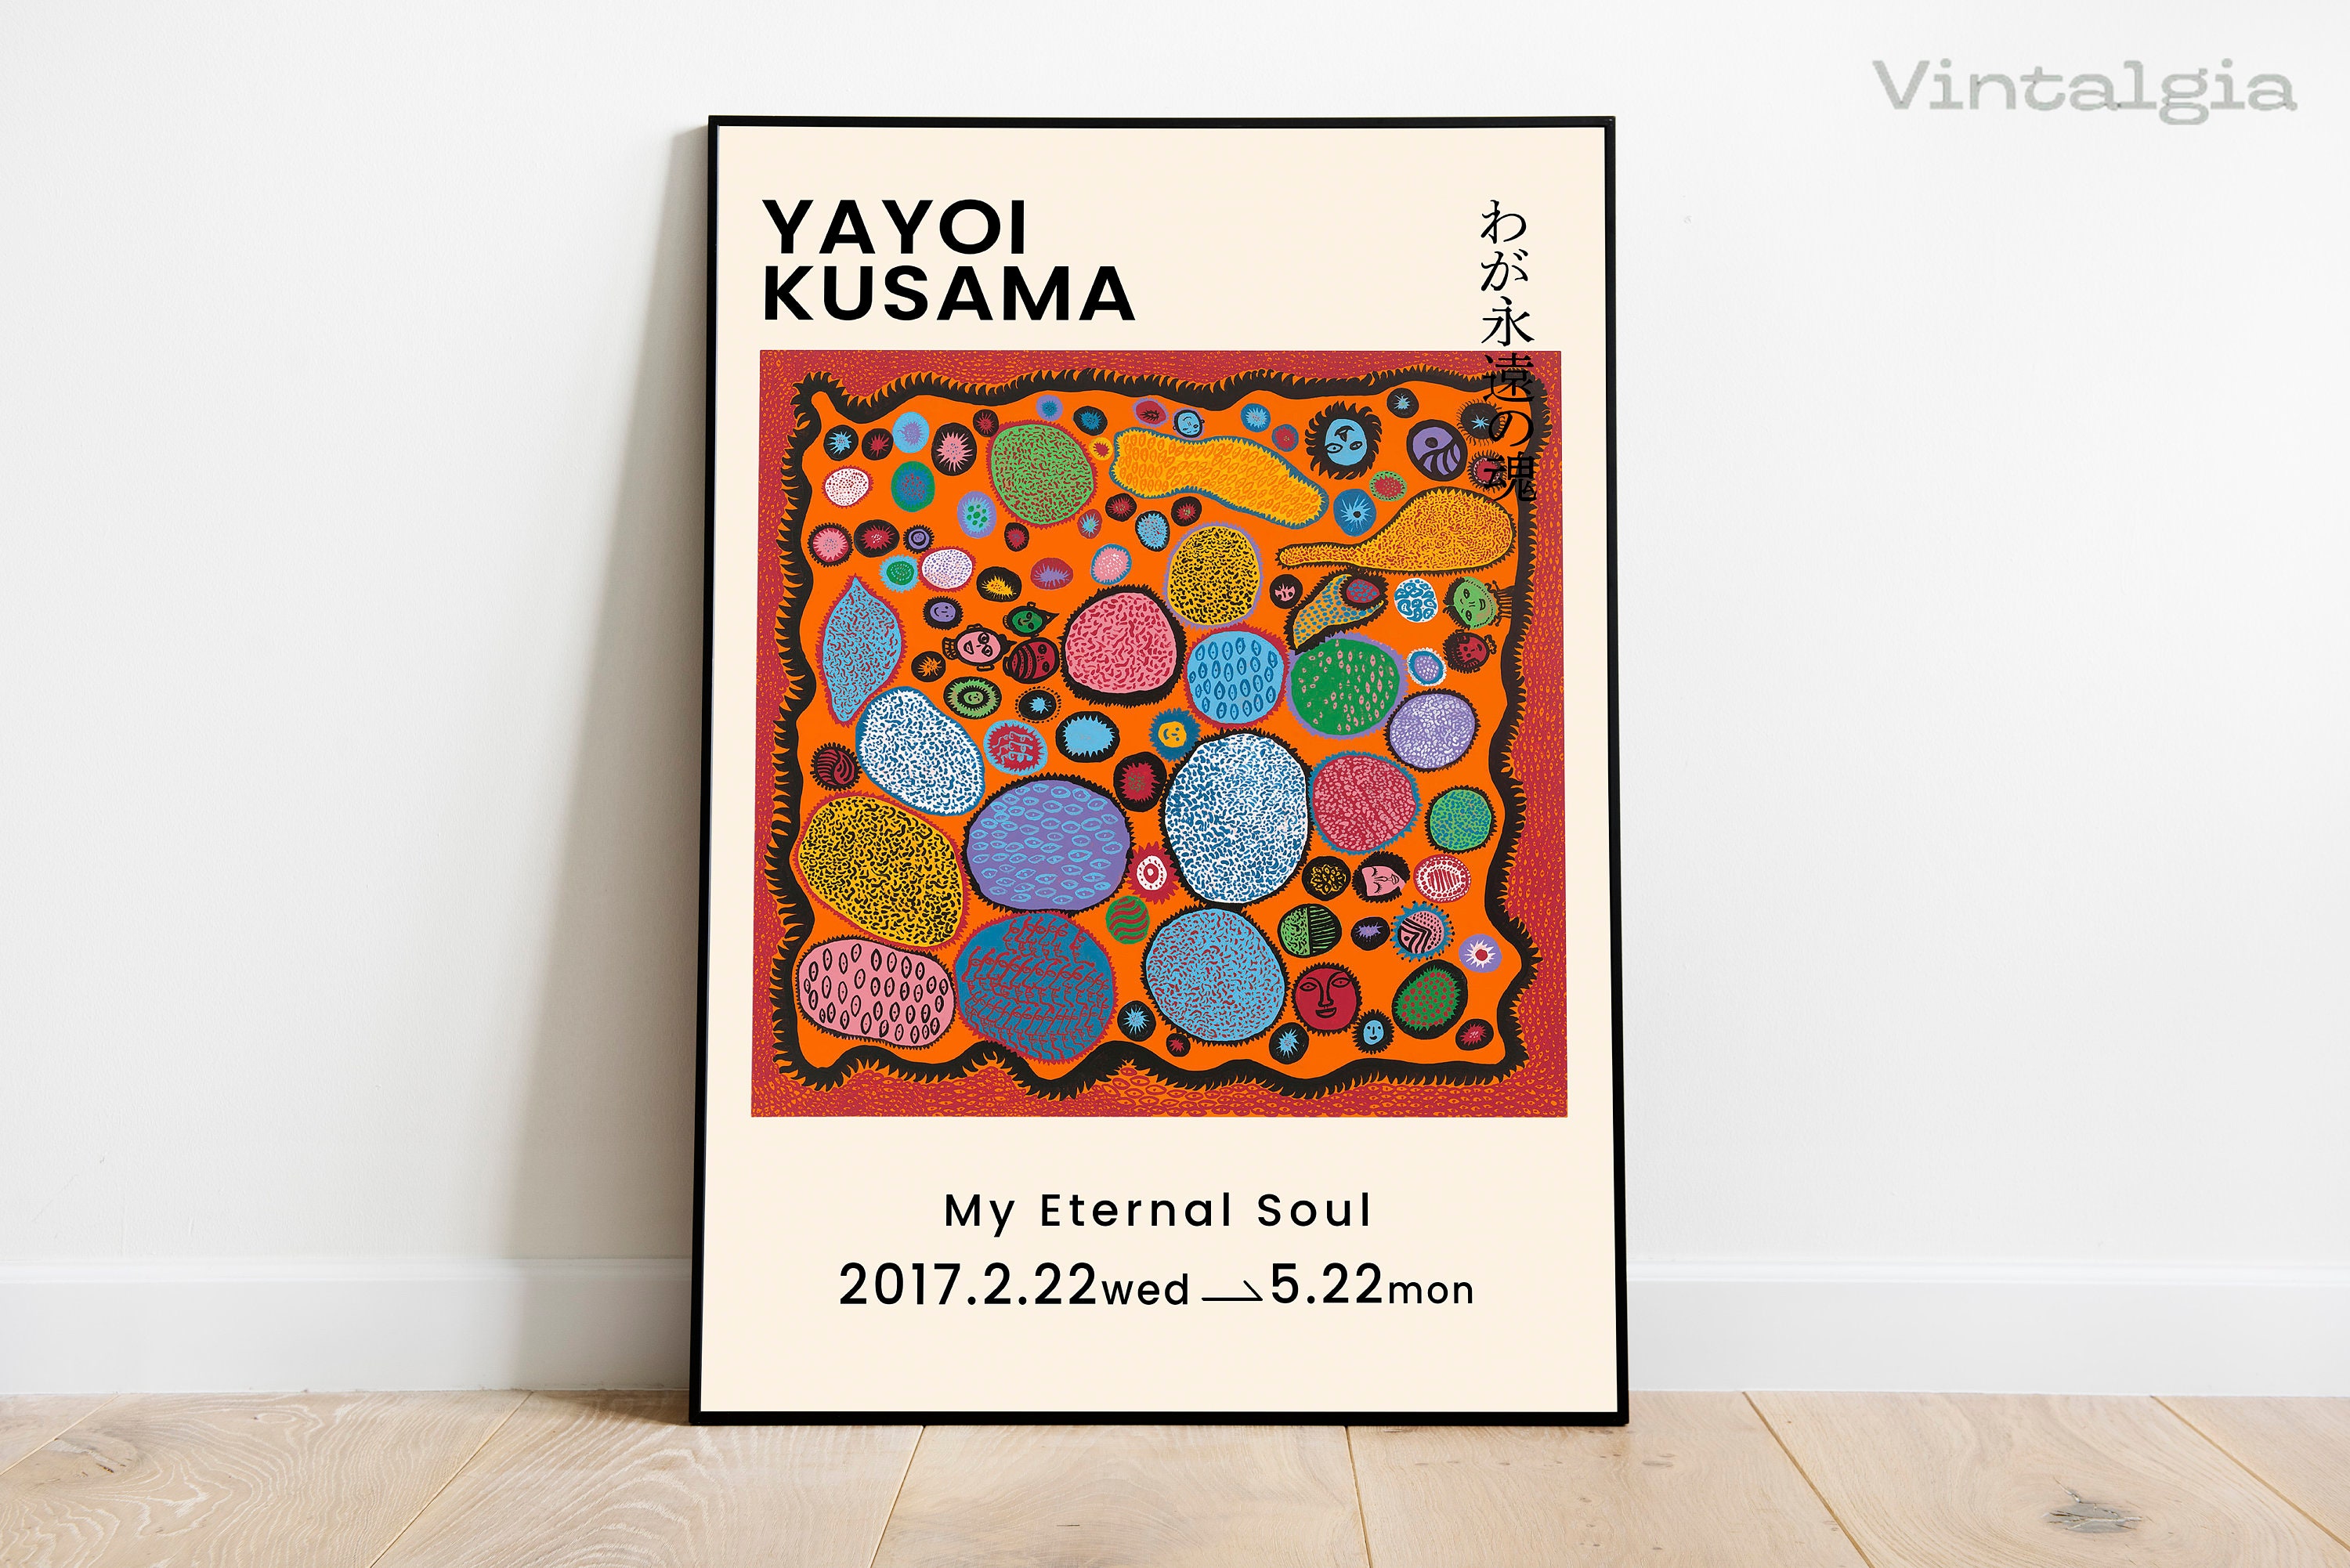 Art that smells great! Japanese contemporary artist Yayoi Kusama